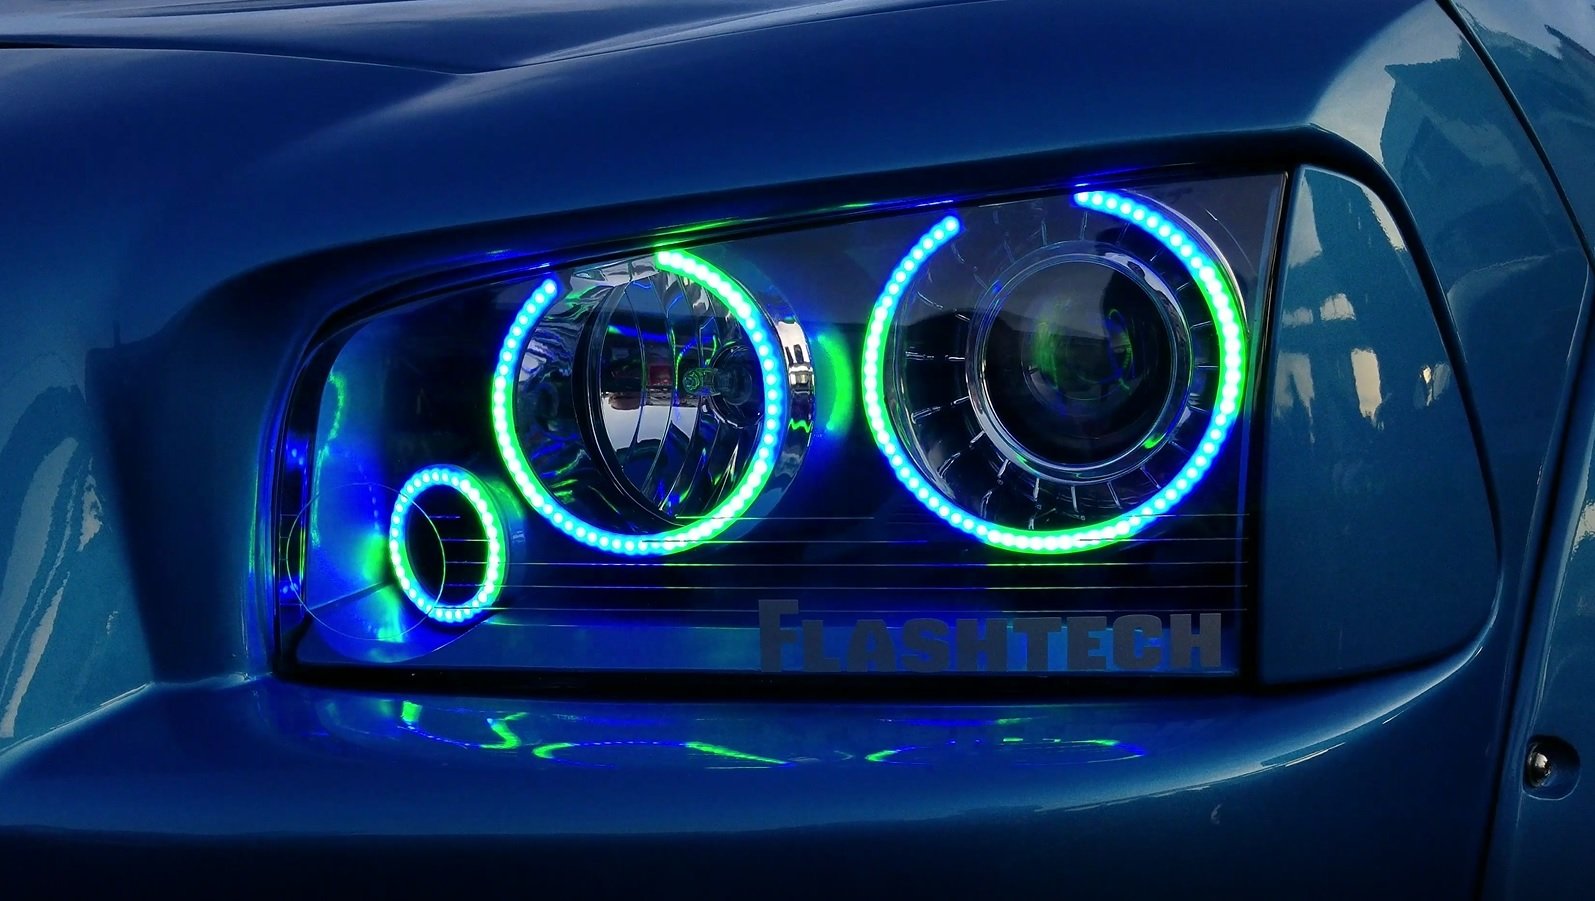 Toyota-Tundra-2007, 2008, 2009, 2010, 2011, 2012, 2013-LED-Halo-Fog Lights-ColorChase-No Remote-TO-TU0713-CCF